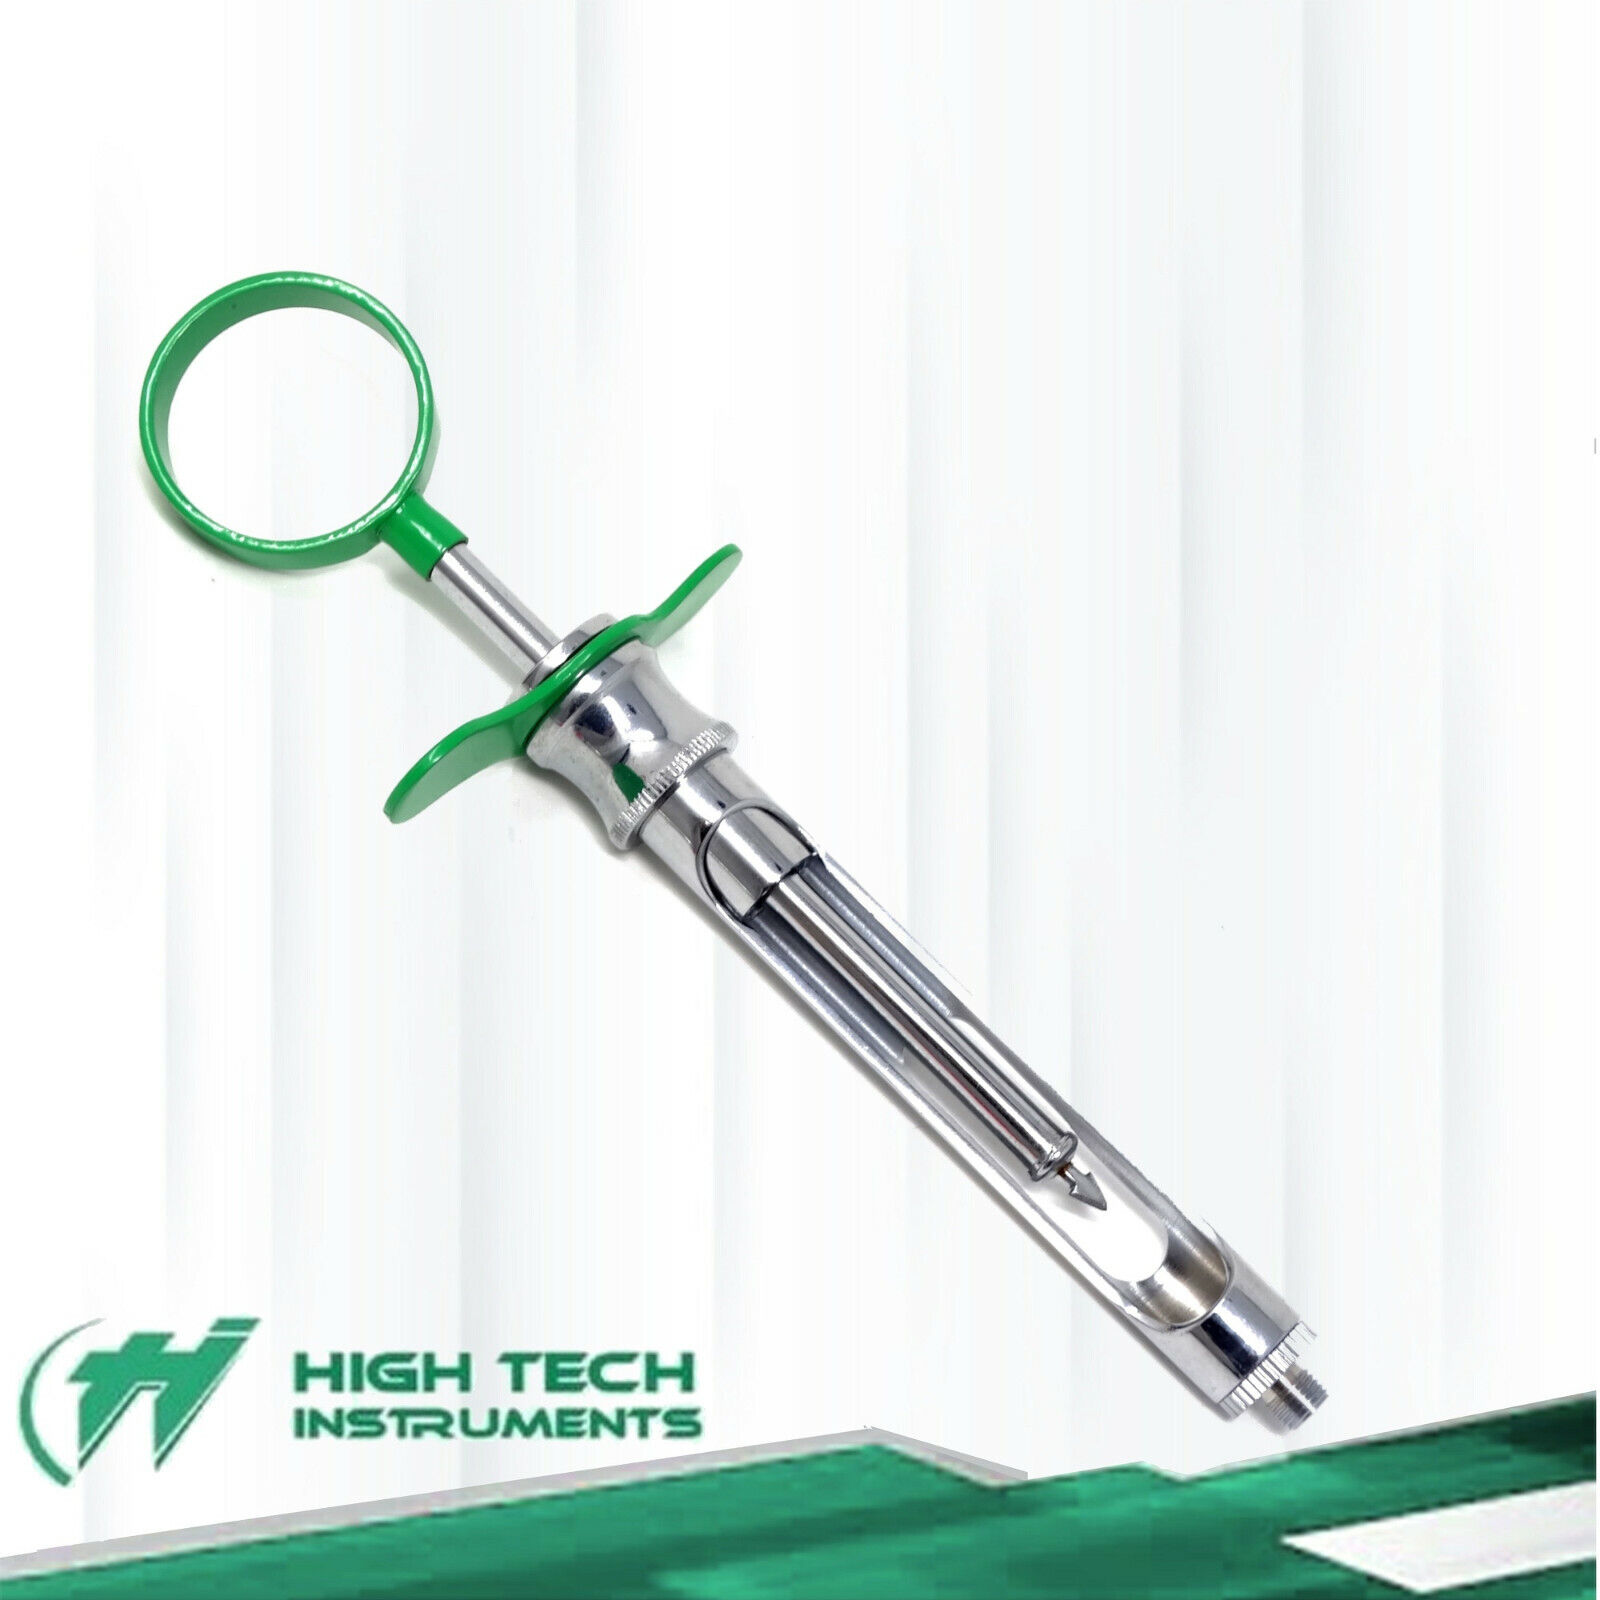 6 Premium Dental Anesthetic Syringe Self-Aspirating 1.8CC-Dental Instruments-A++ HIGH TECH INSTRUMENTS Does Not Apply - фотография #2